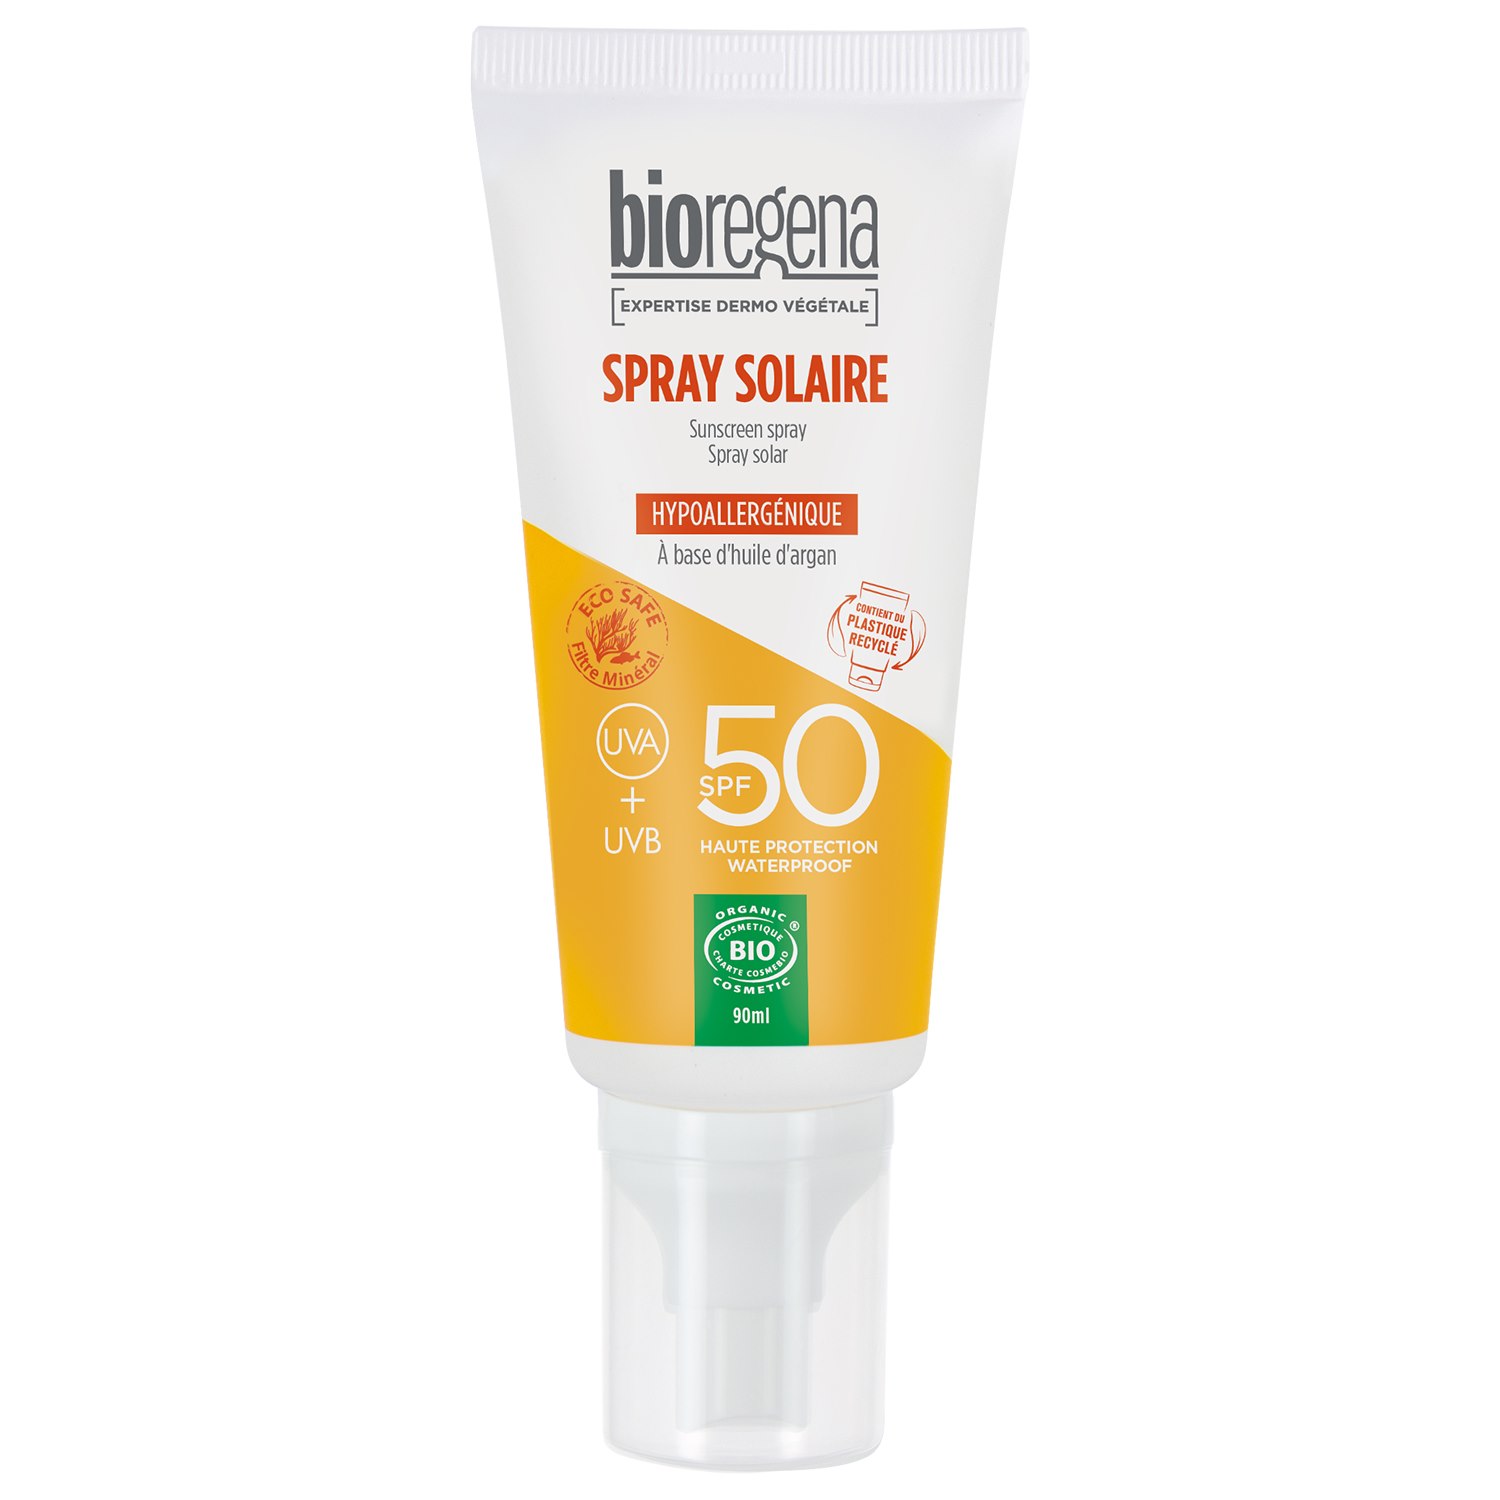 Bioregena Sunscreen Spray SPF 50 Face & Body, 90 ml